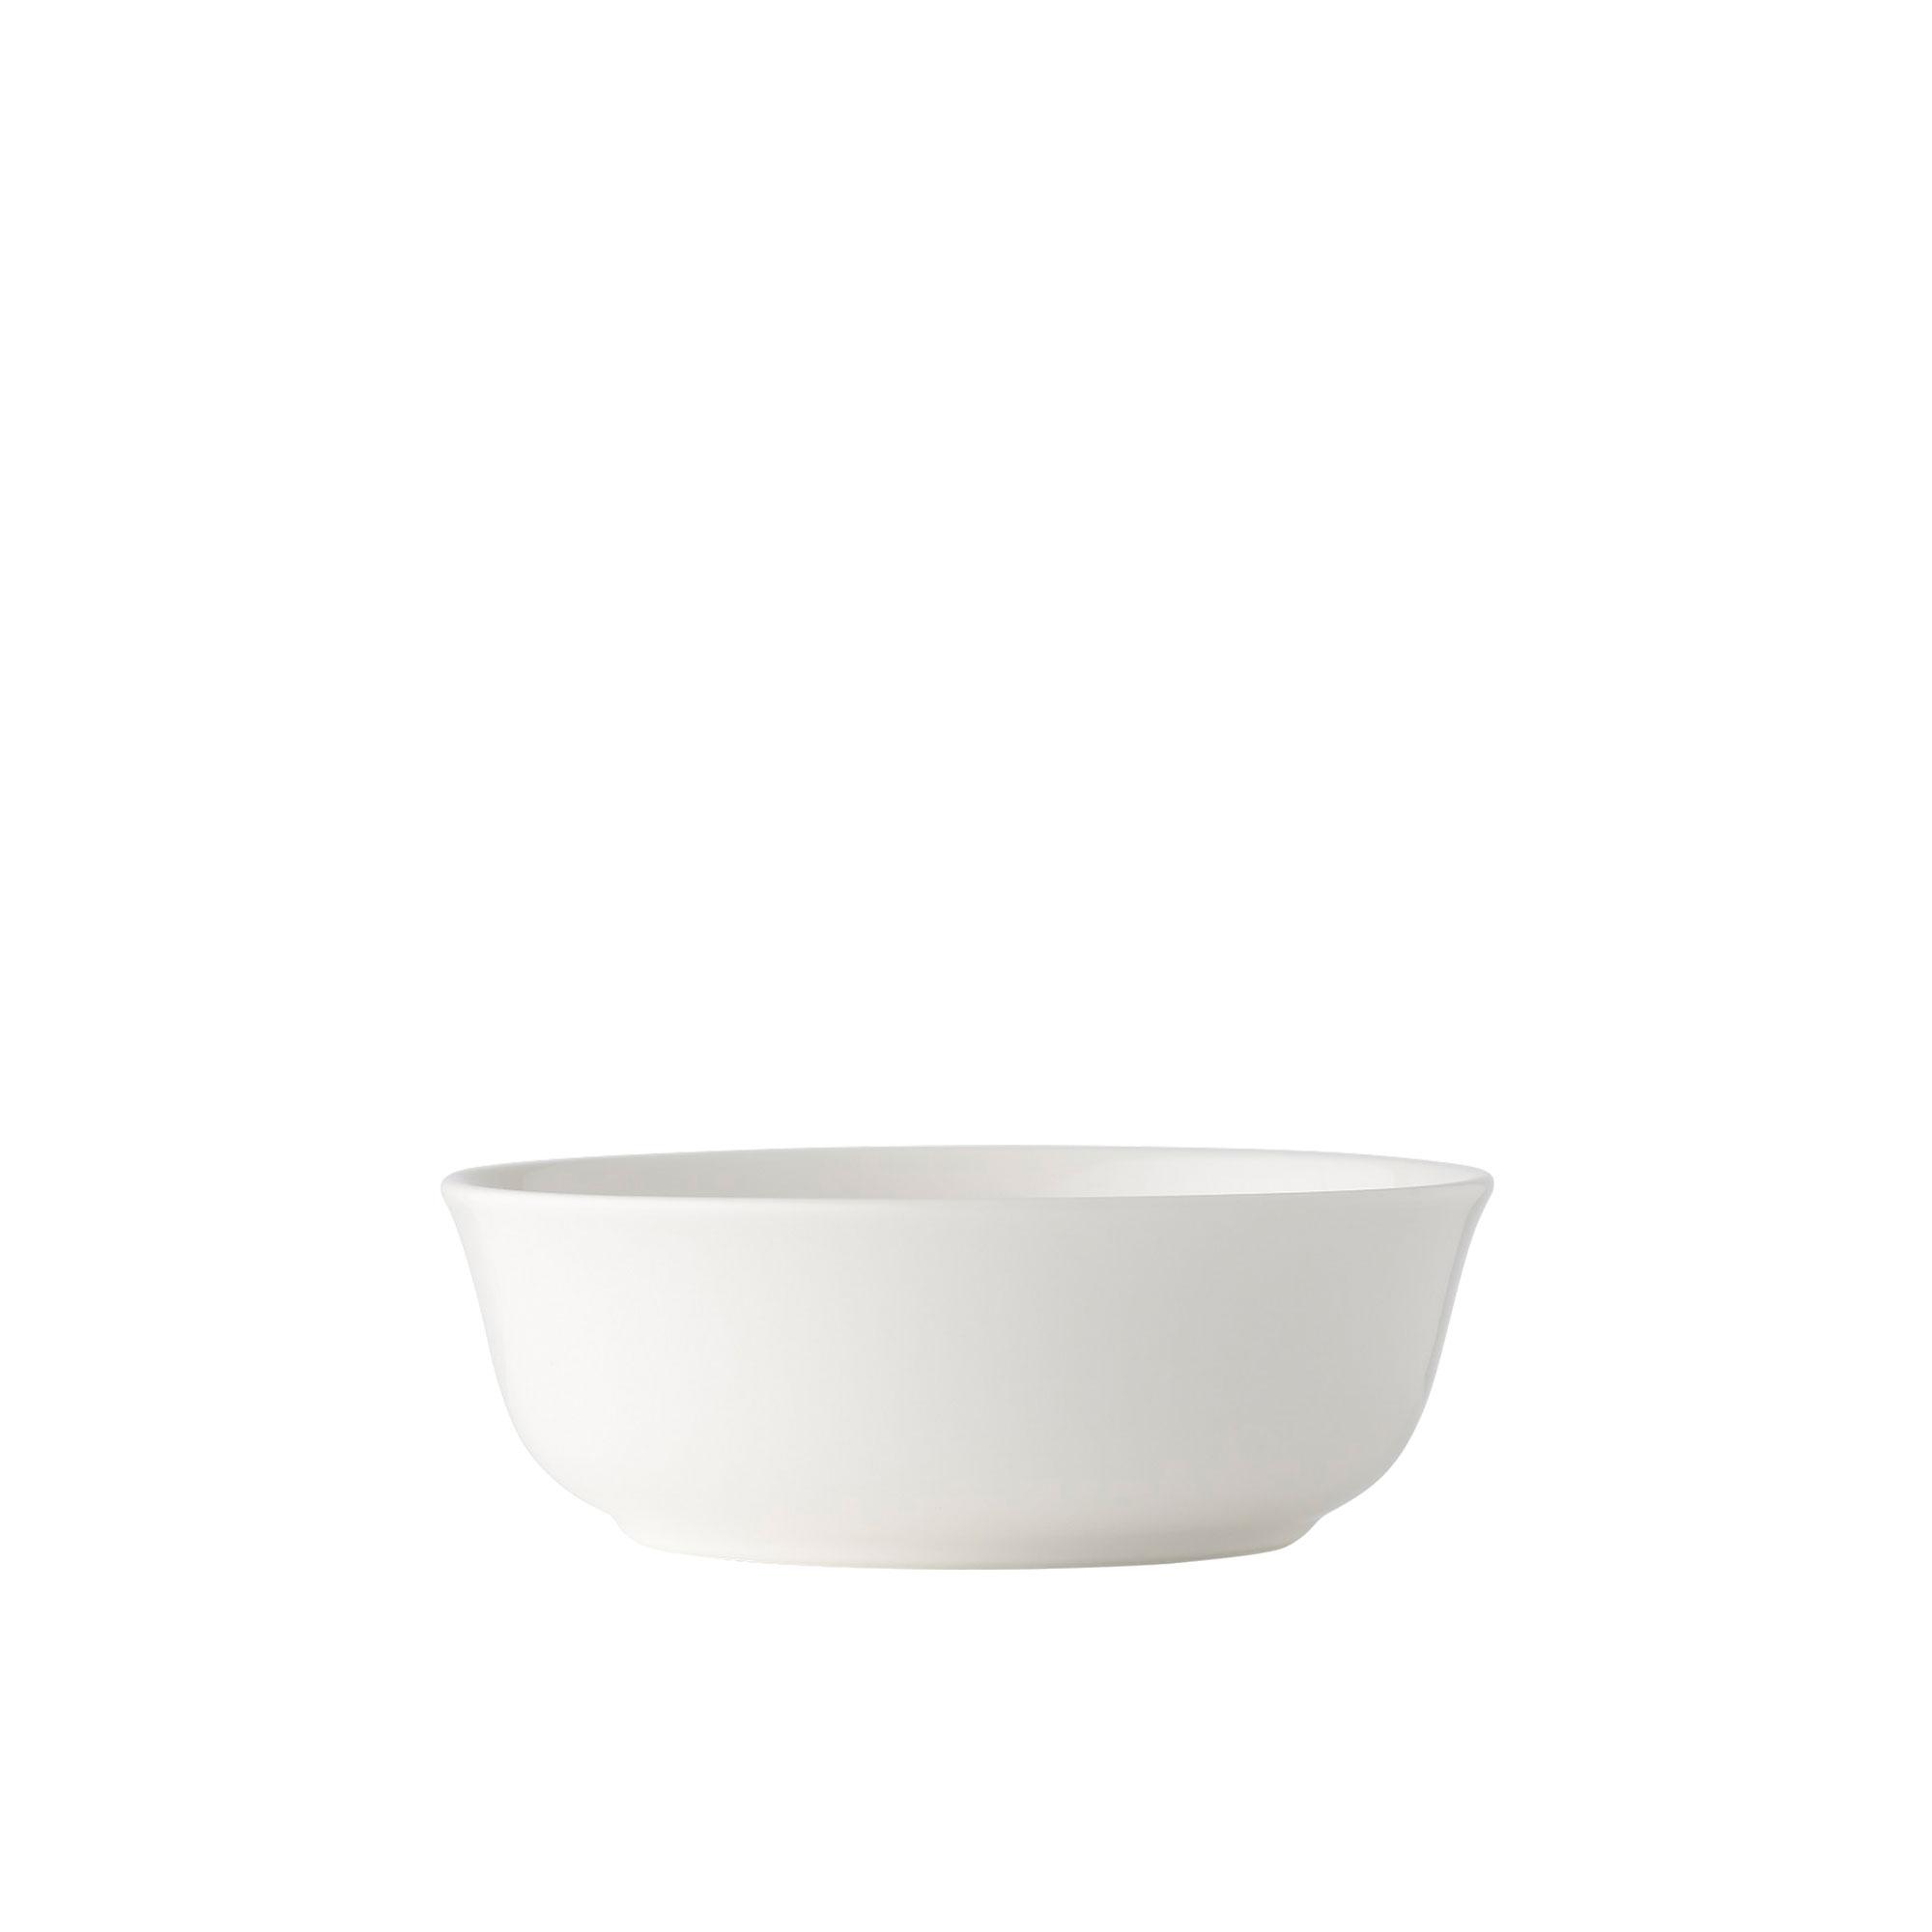 Noritake Everyday by Adam Liaw Rice Bowl Set of 4 White Image 4